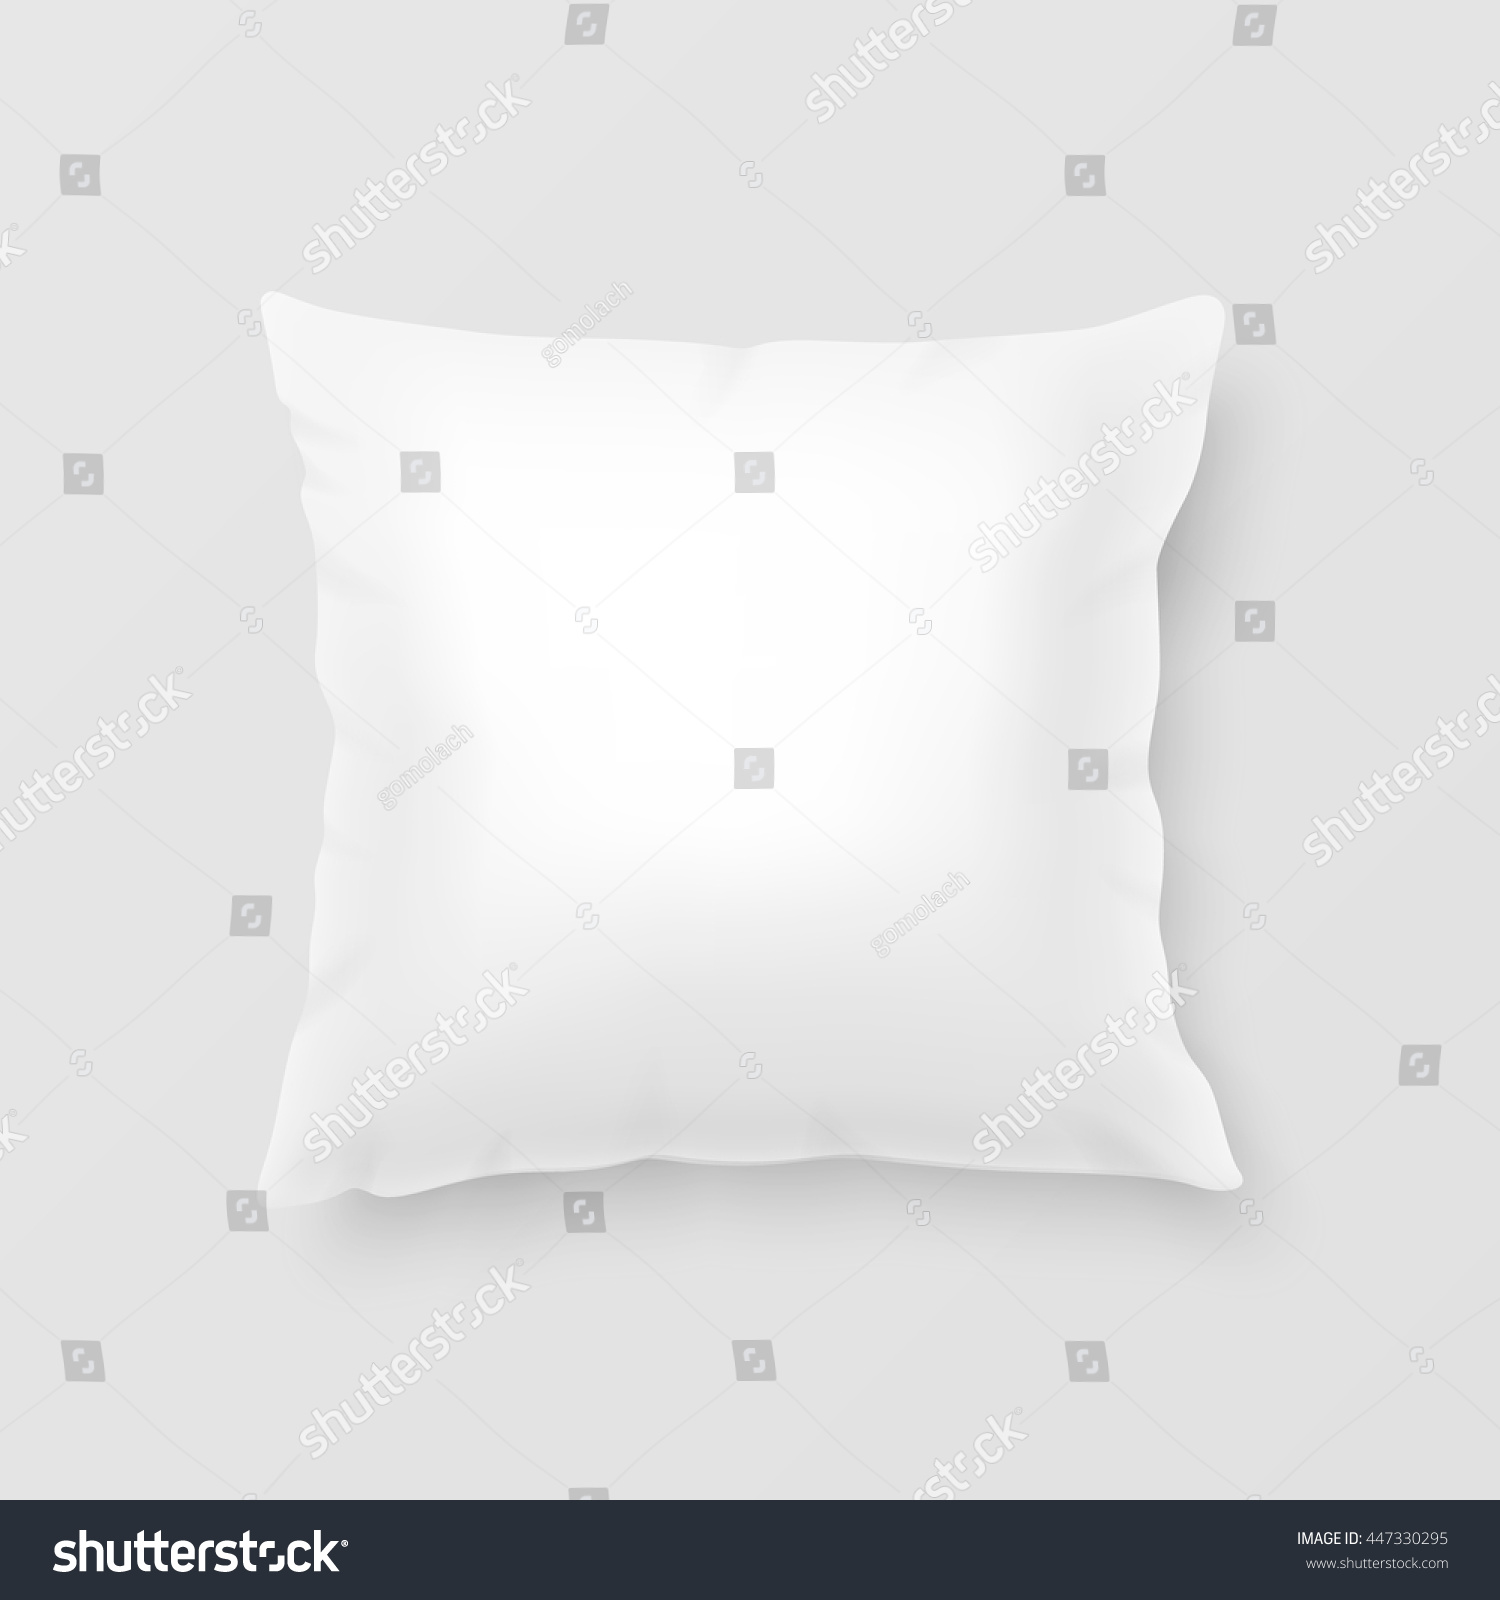 Realistic Vector Pillow - 447330295 : Shutterstock